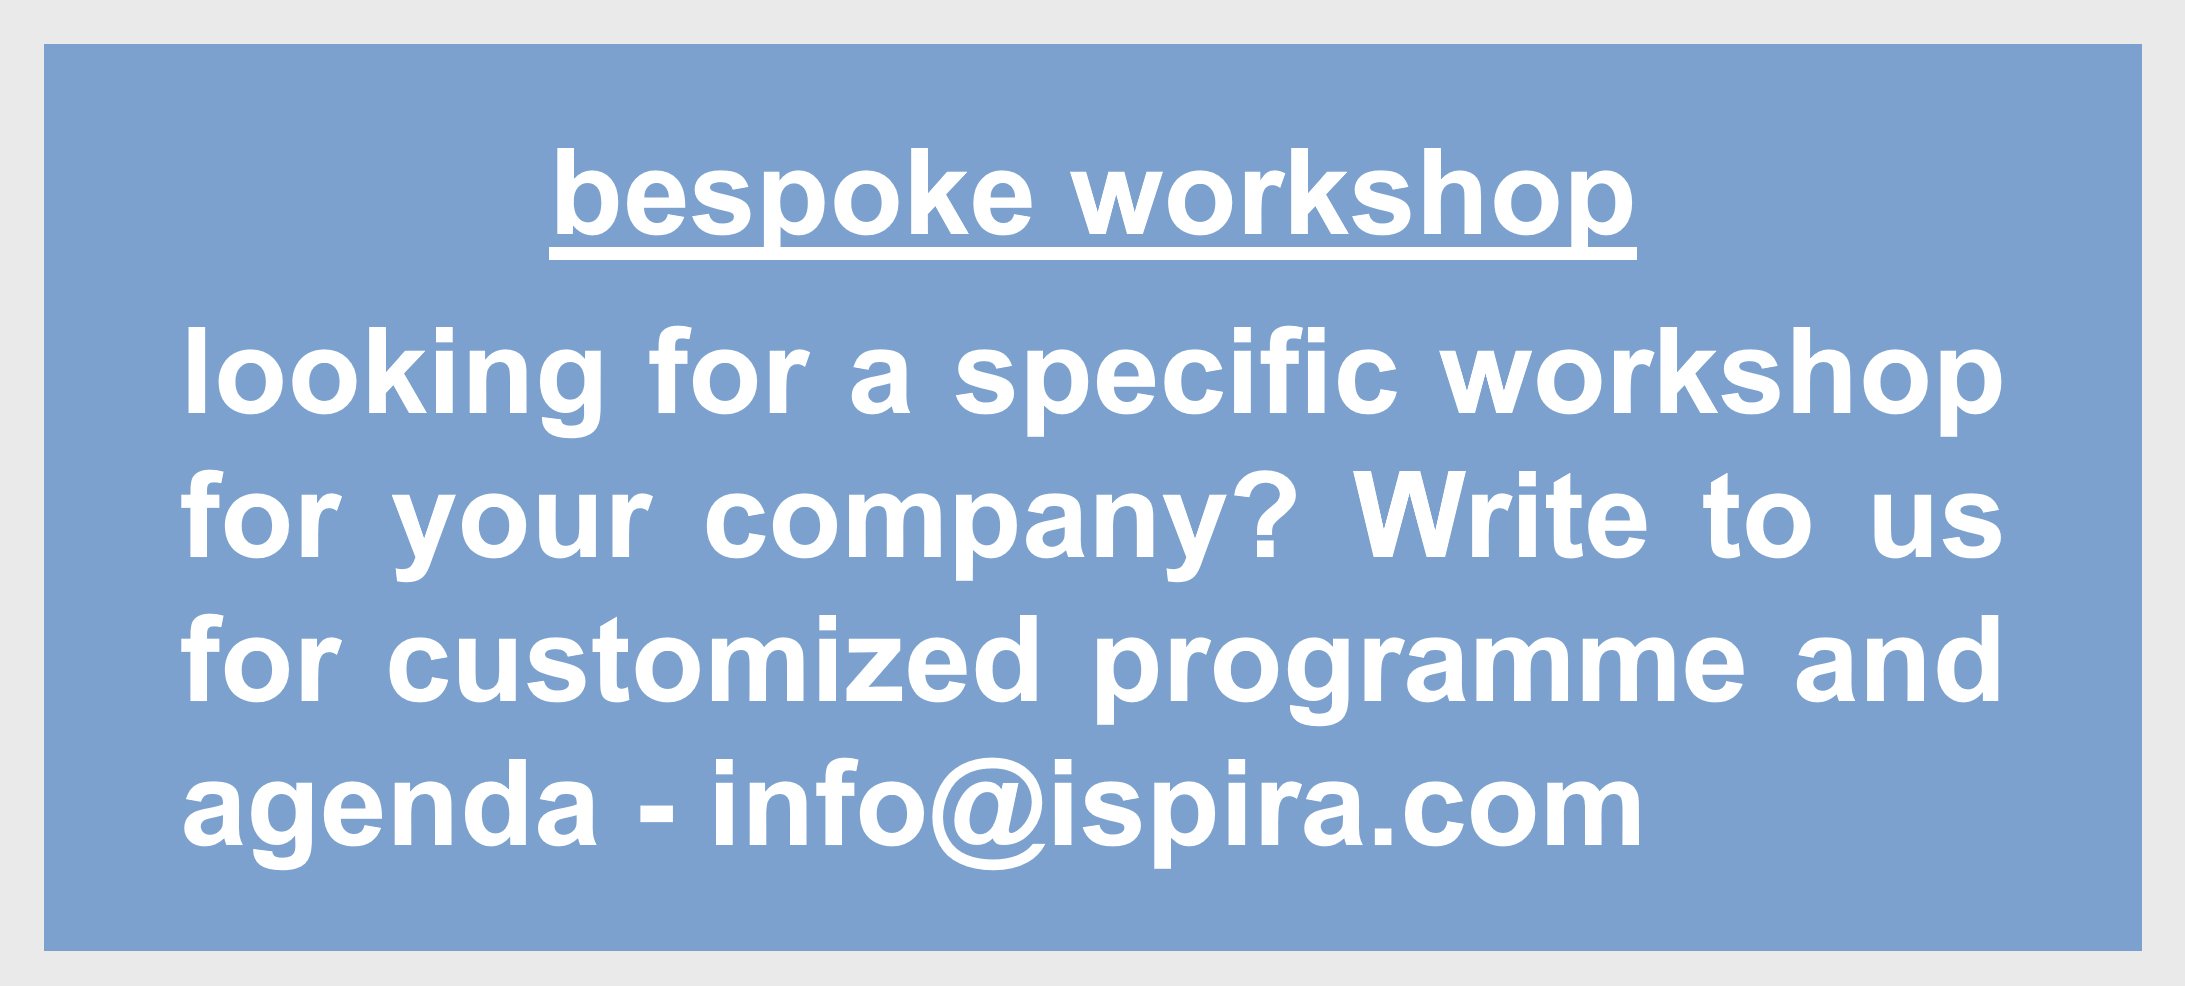 Bespoke session - Ispira Ltd